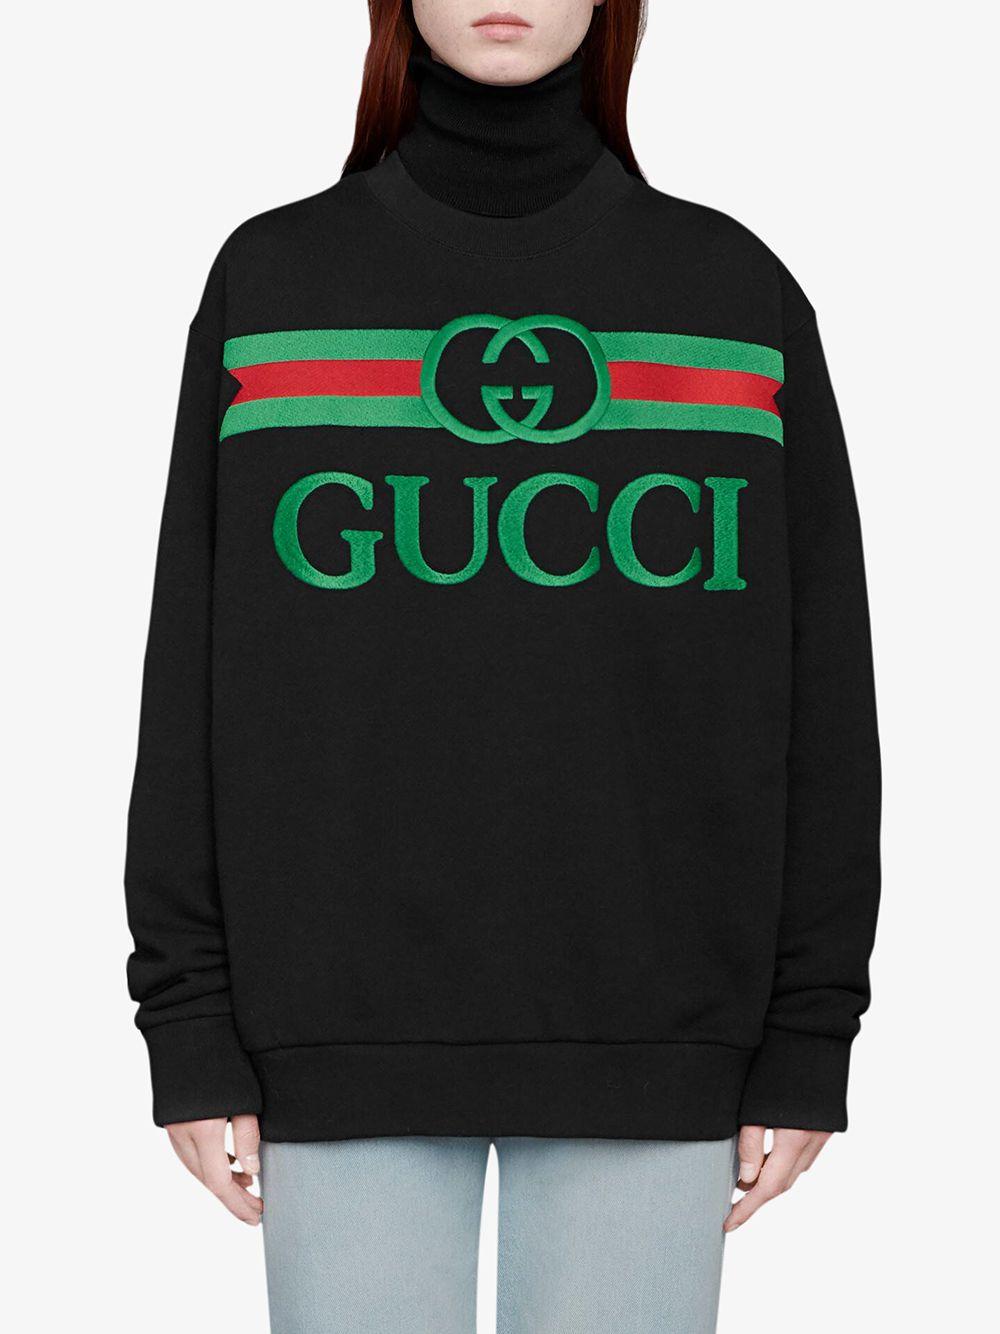 Gucci Embroidered Logo Sweatshirt in Black - Lyst